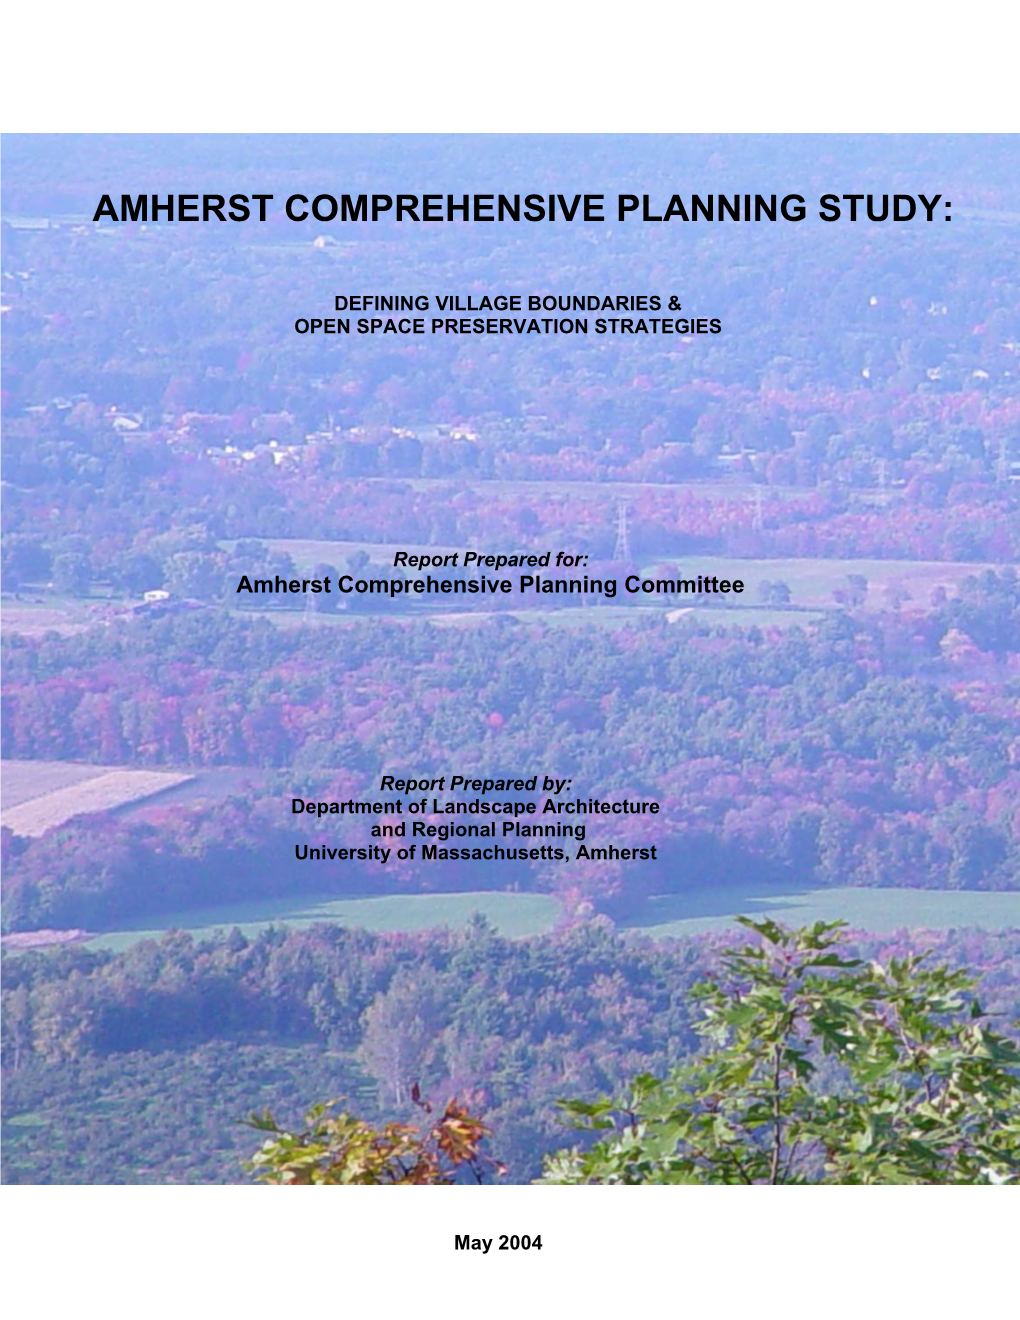 Comprehensive Planning Study